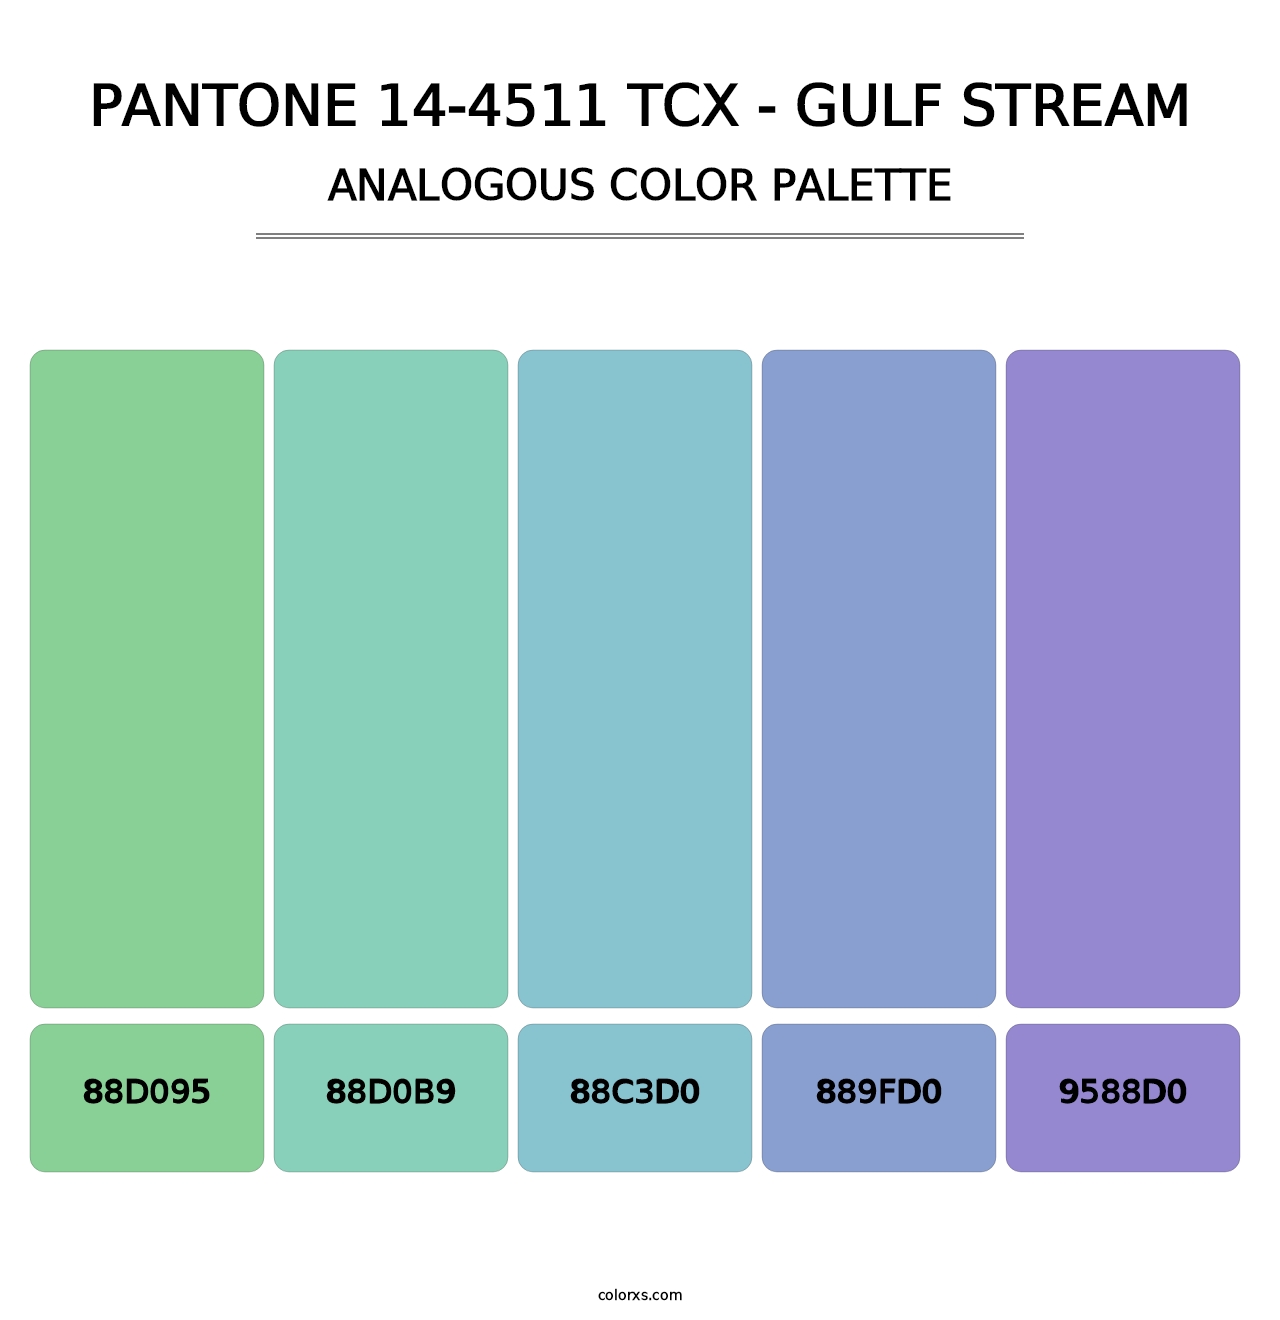 PANTONE 14-4511 TCX - Gulf Stream - Analogous Color Palette